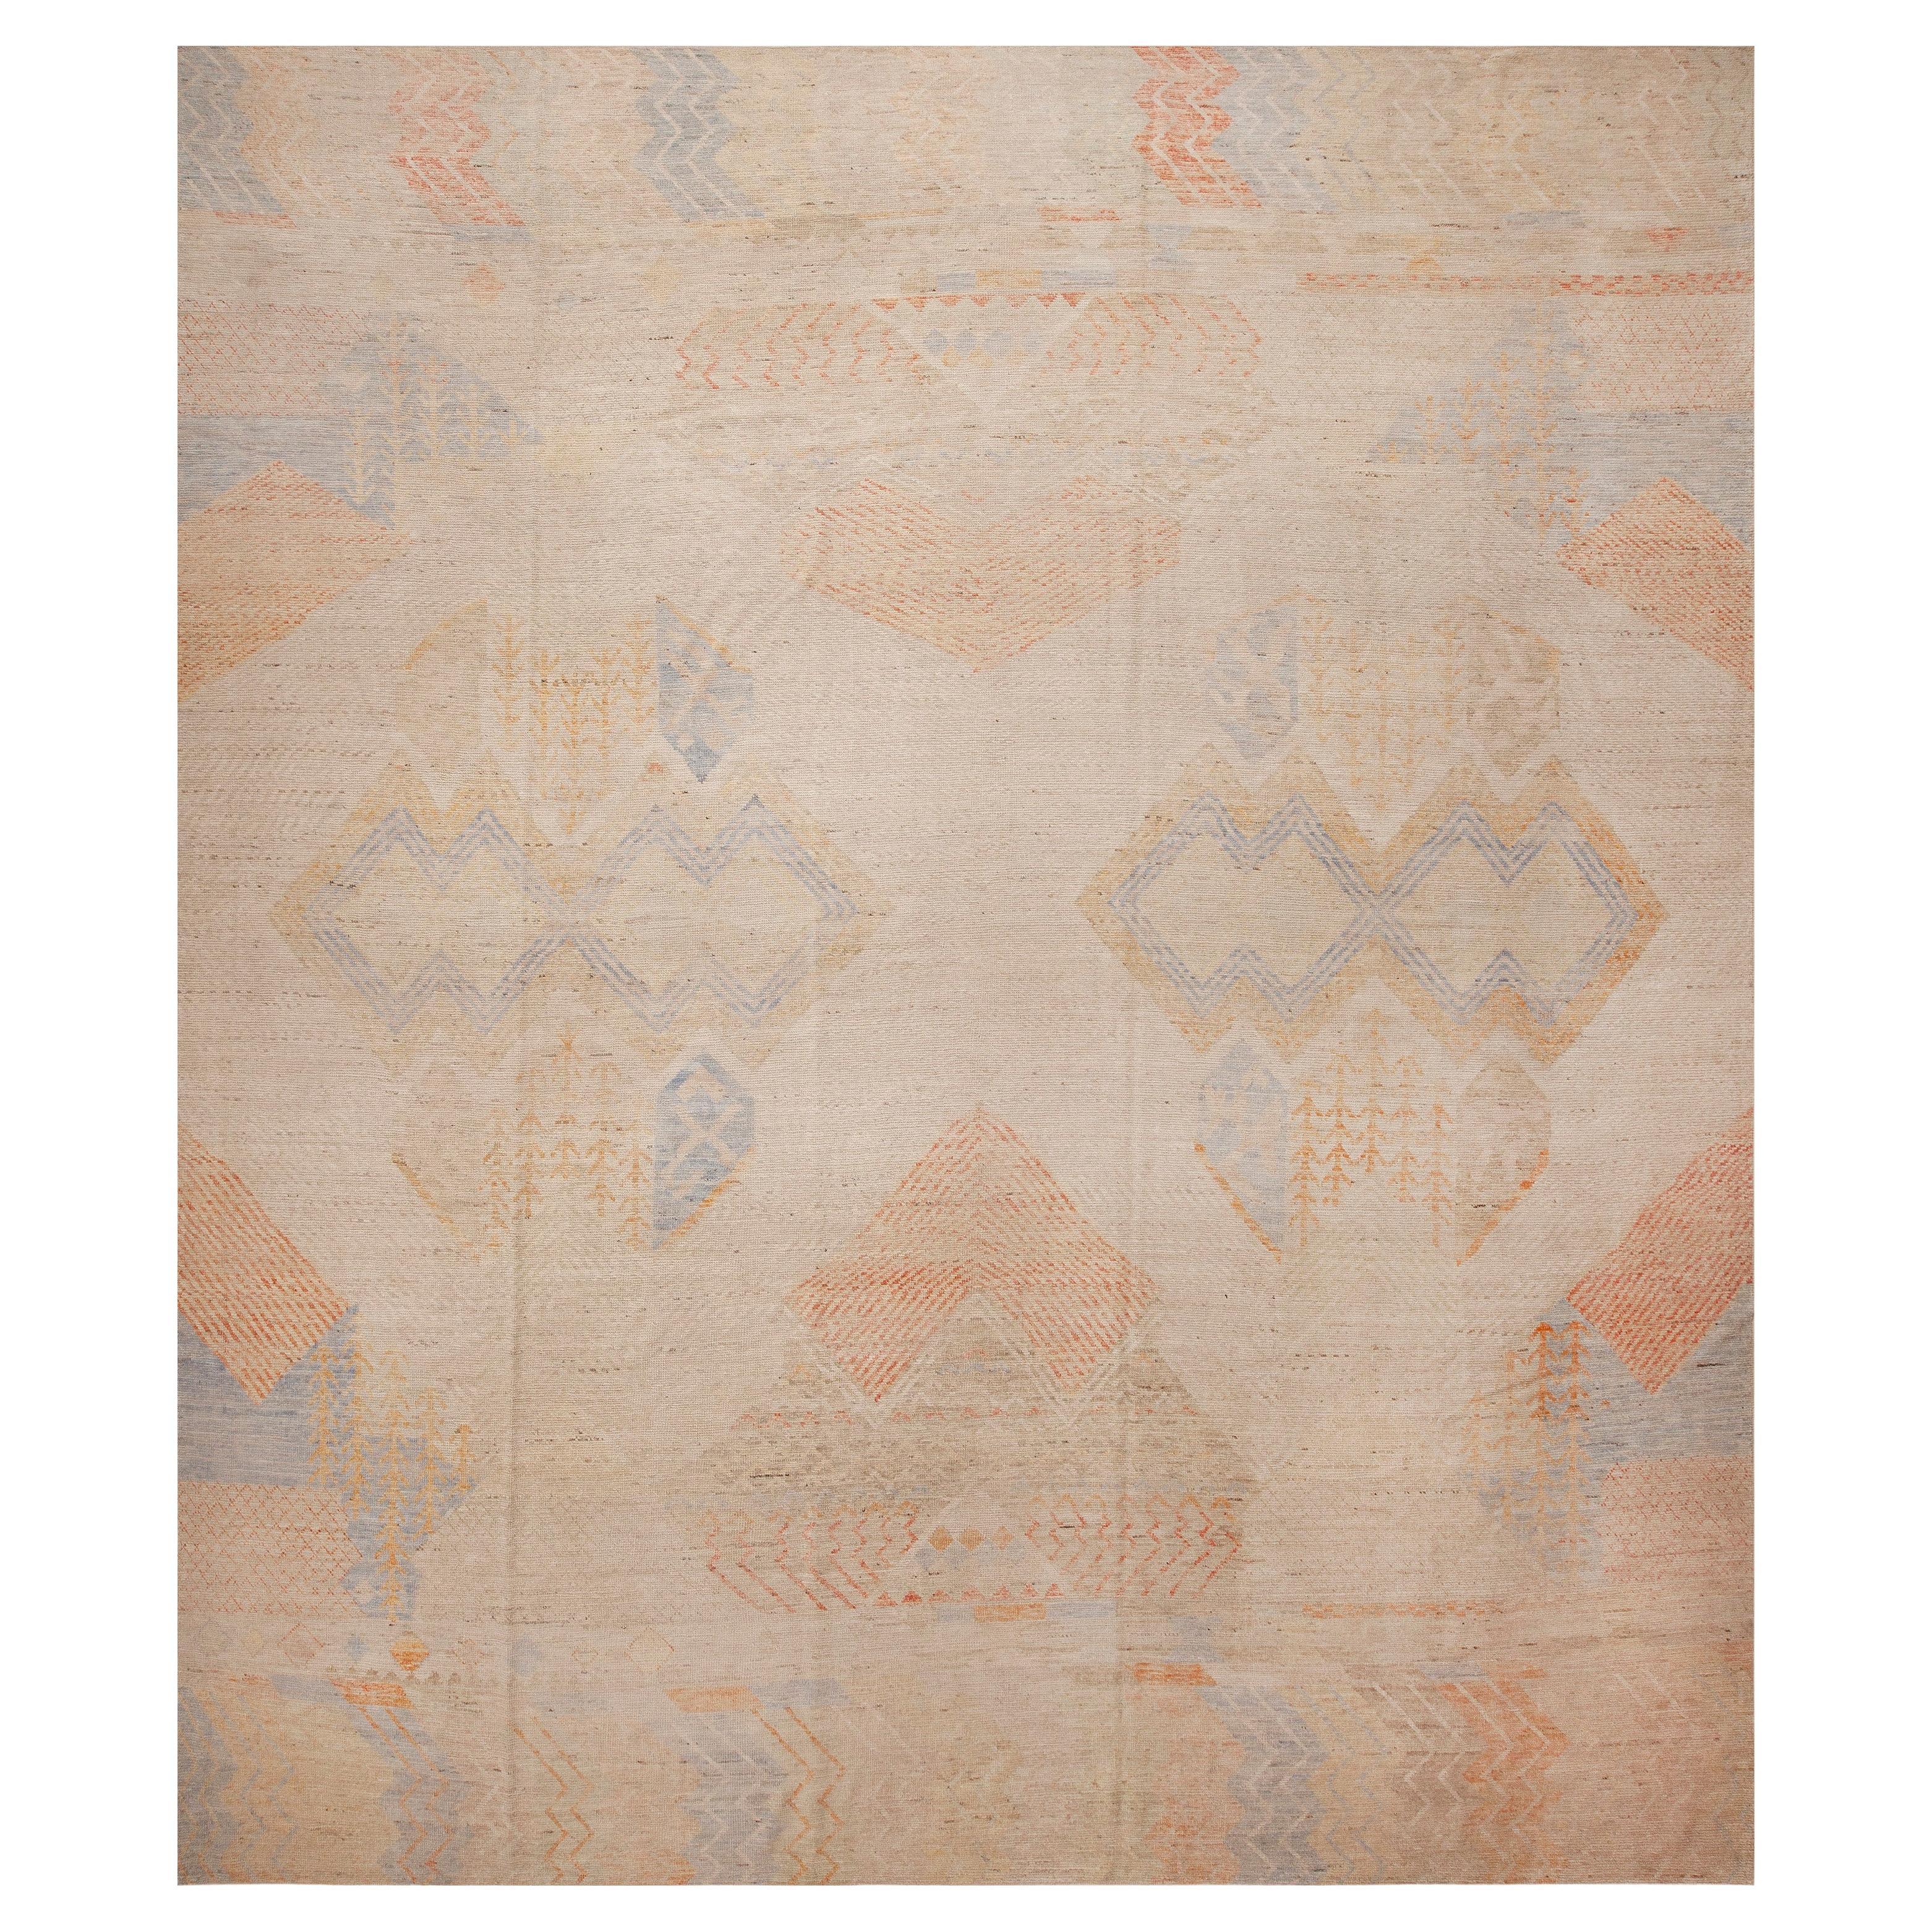 Collection Nazmiyal collection Rustic Tribal Geometric Design Modern Area Rug 14' x 16'2"